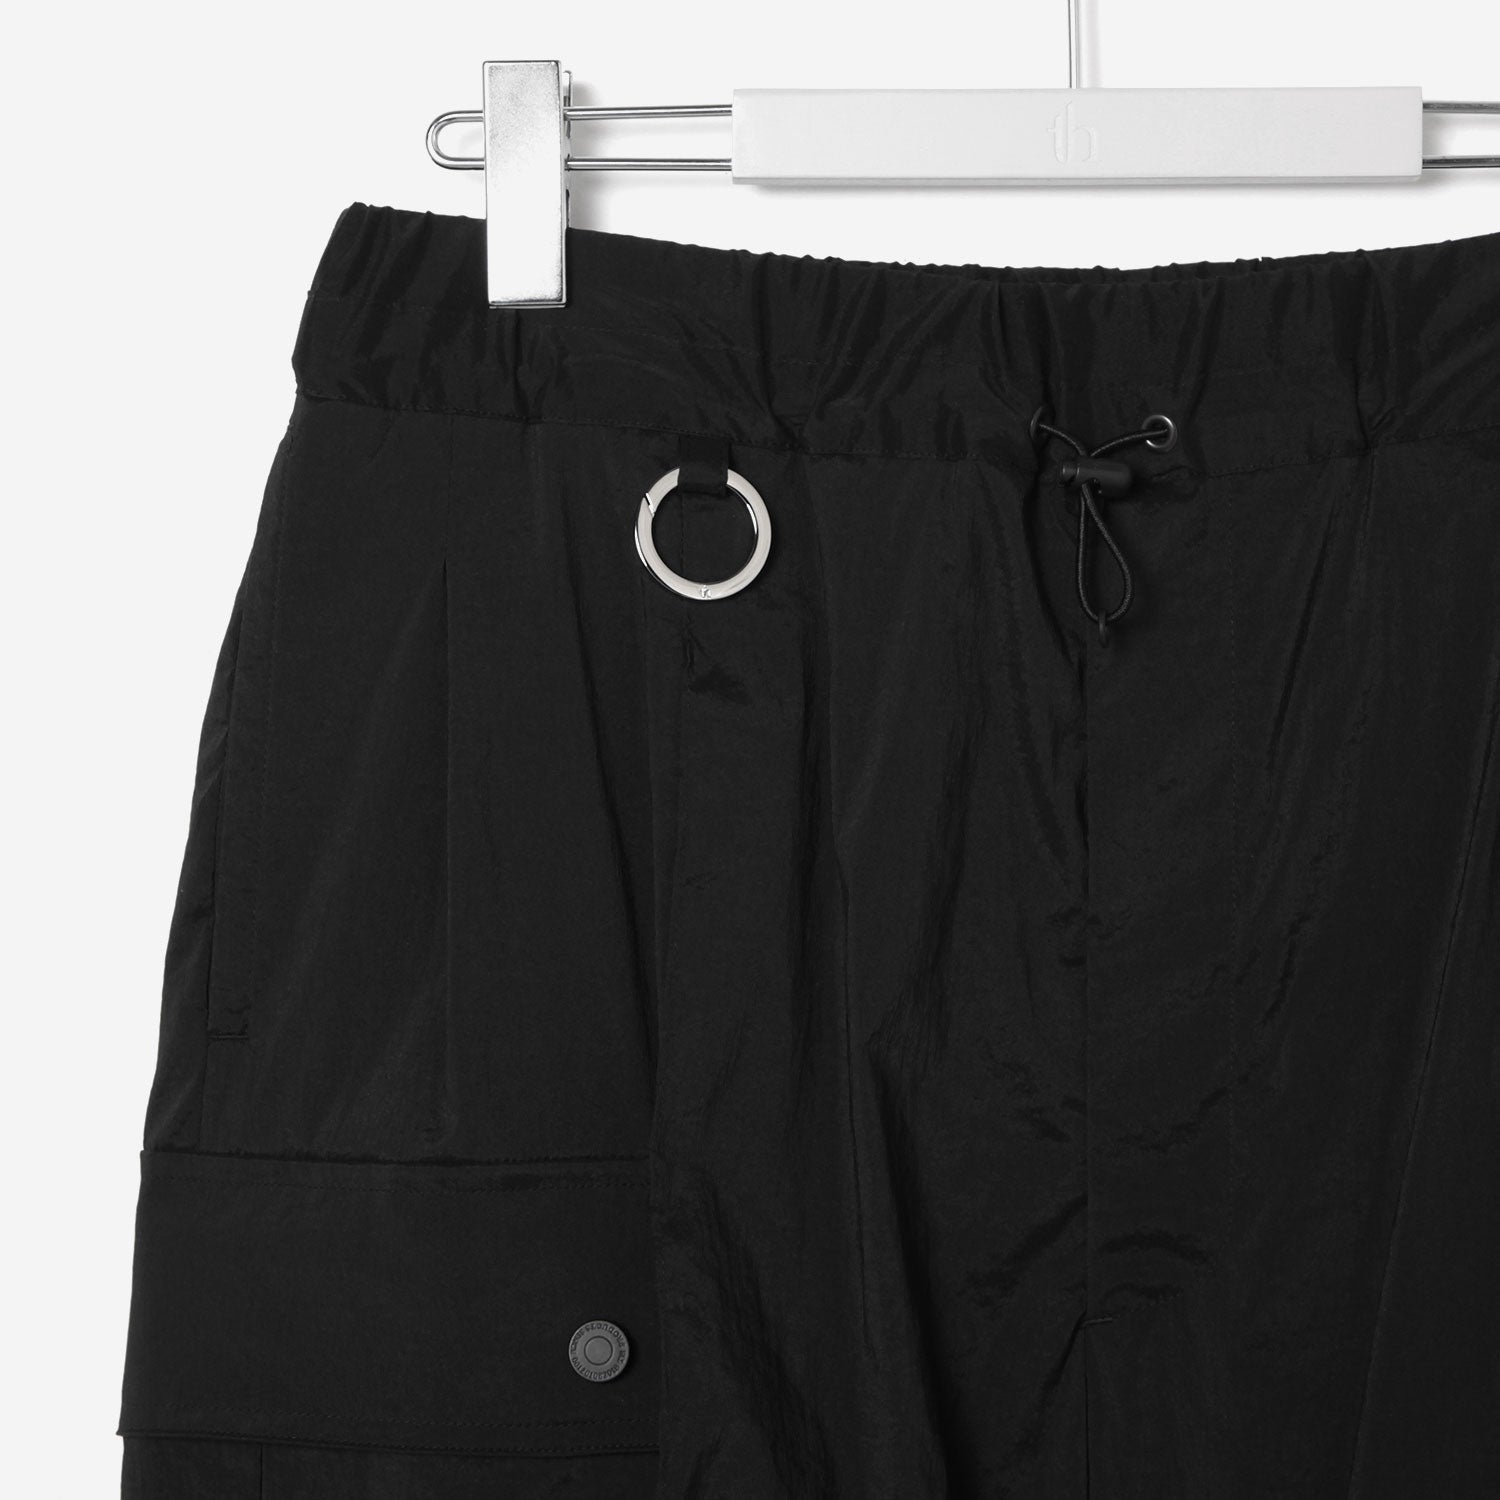 NERDRUM / Cargo Pants / black